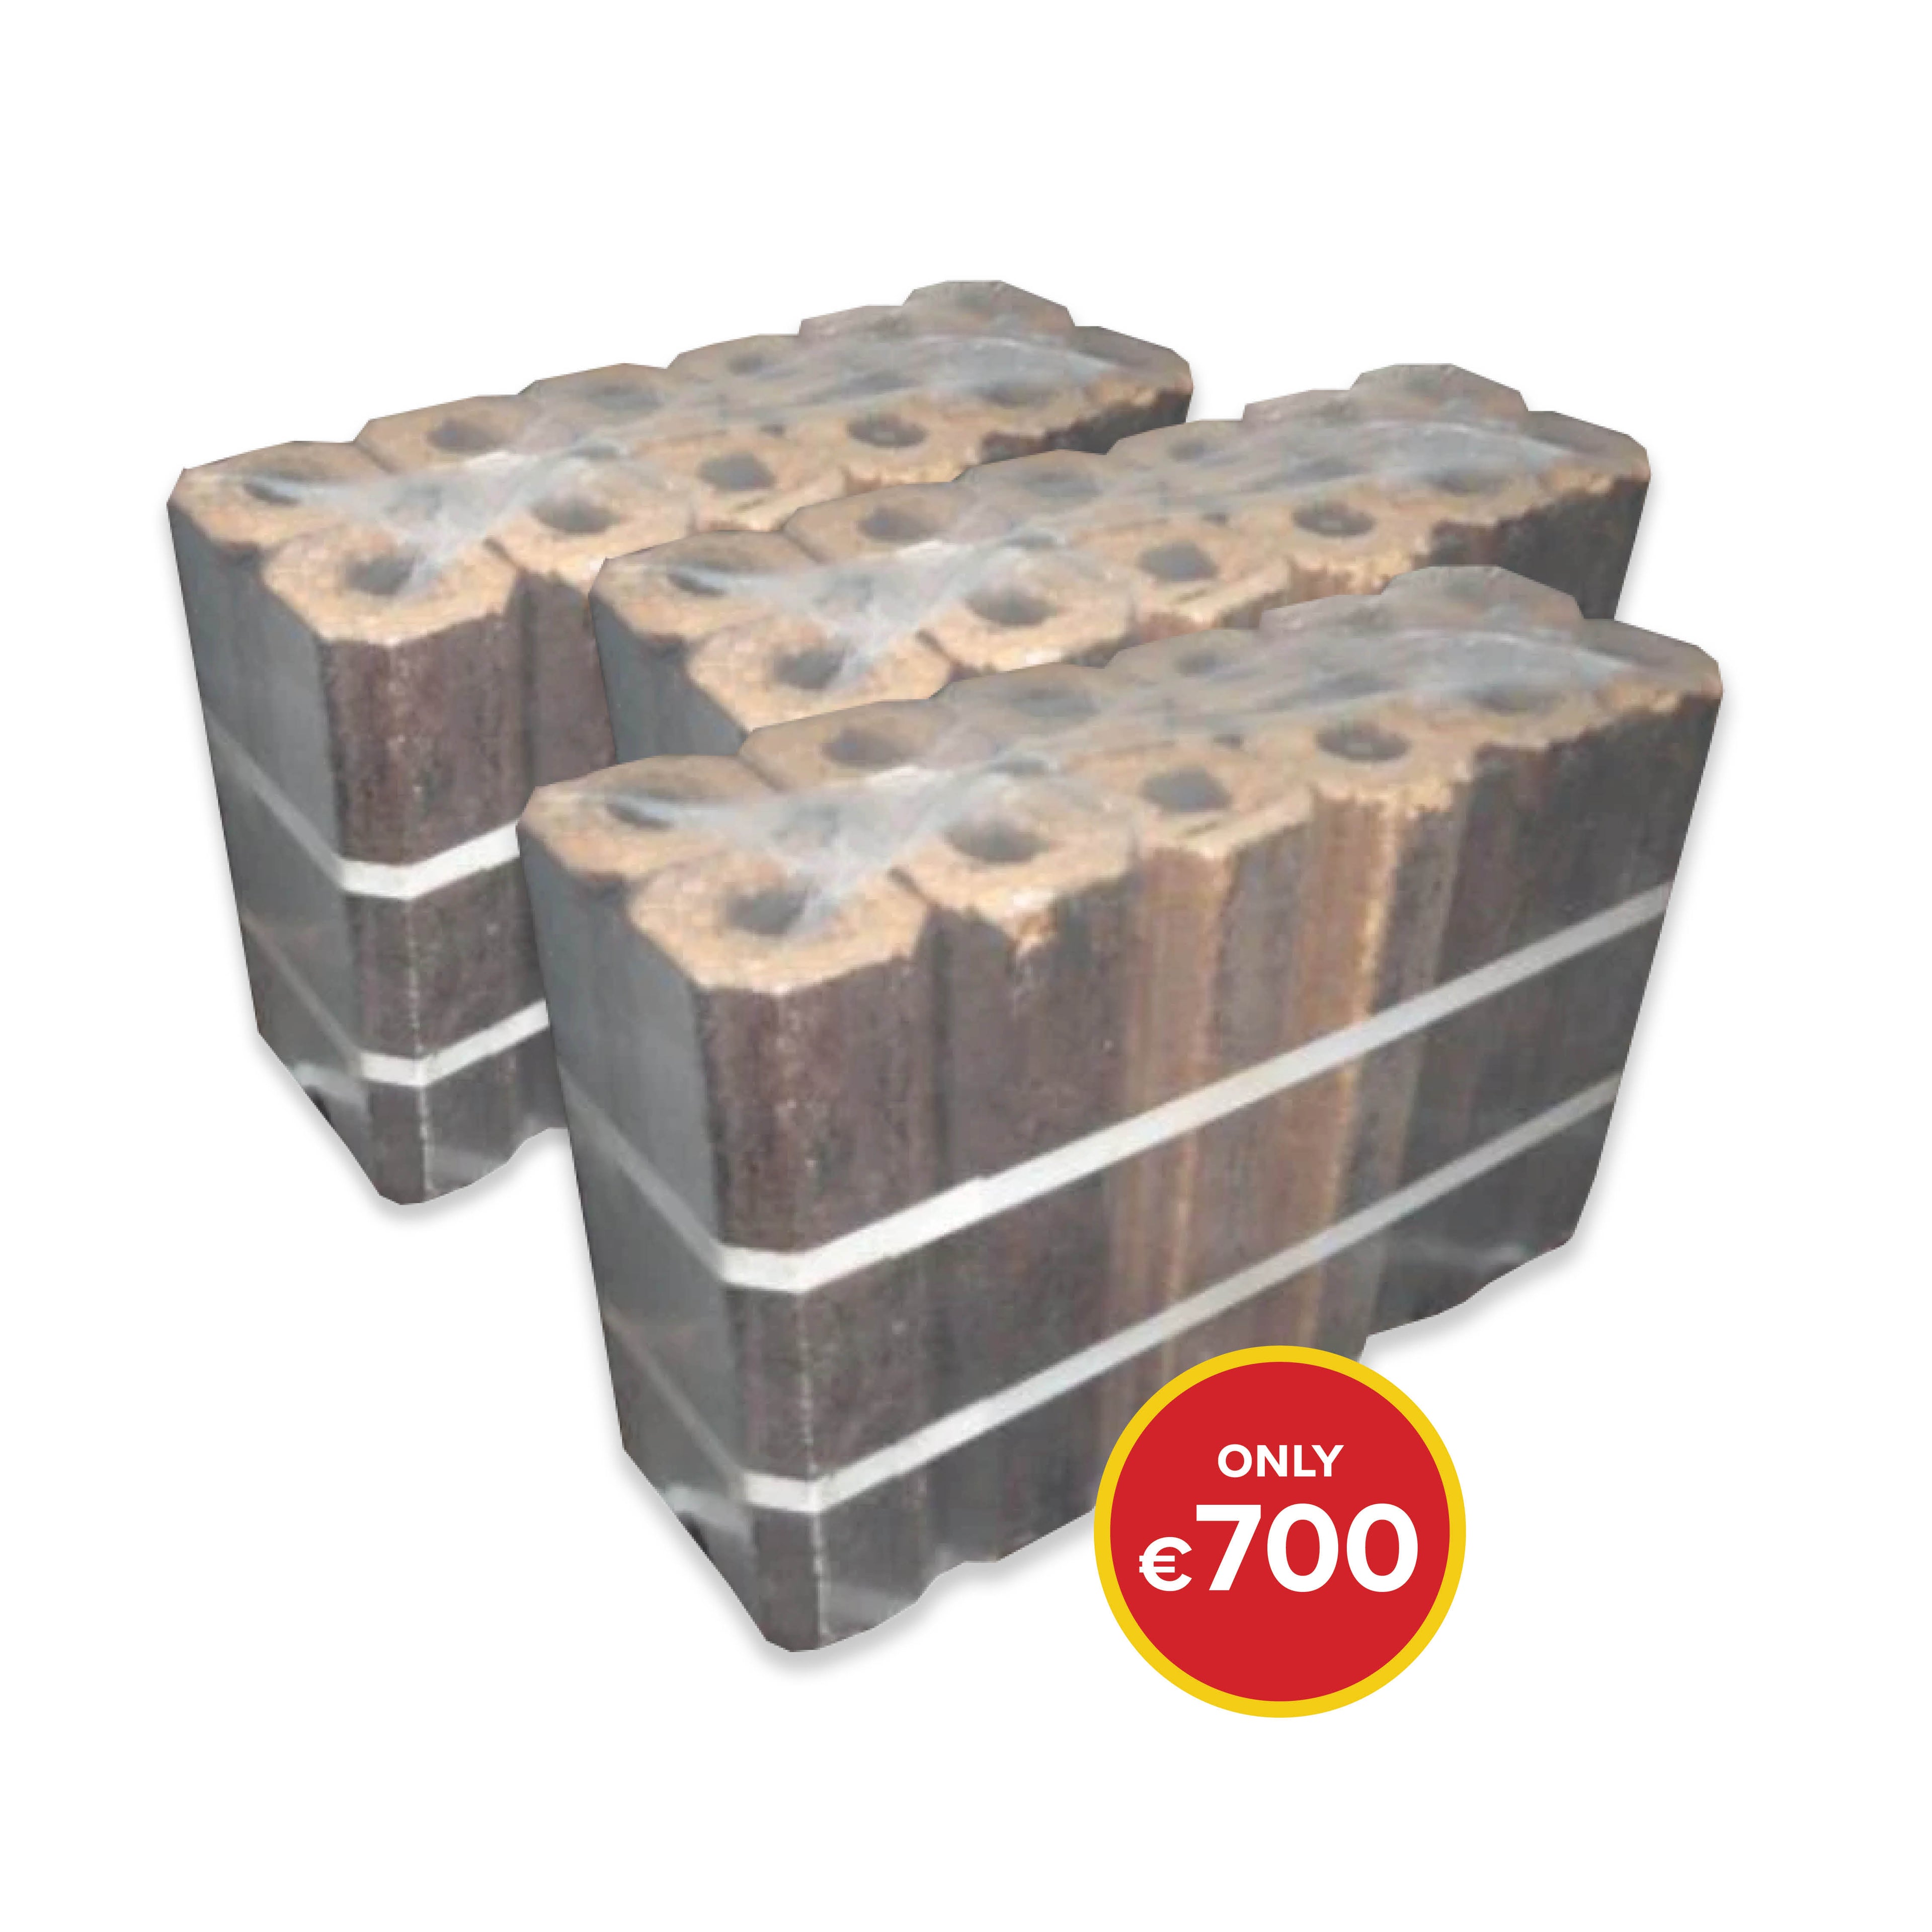 Buy 96 bales of Hardwood Briquettes 12pck for €700